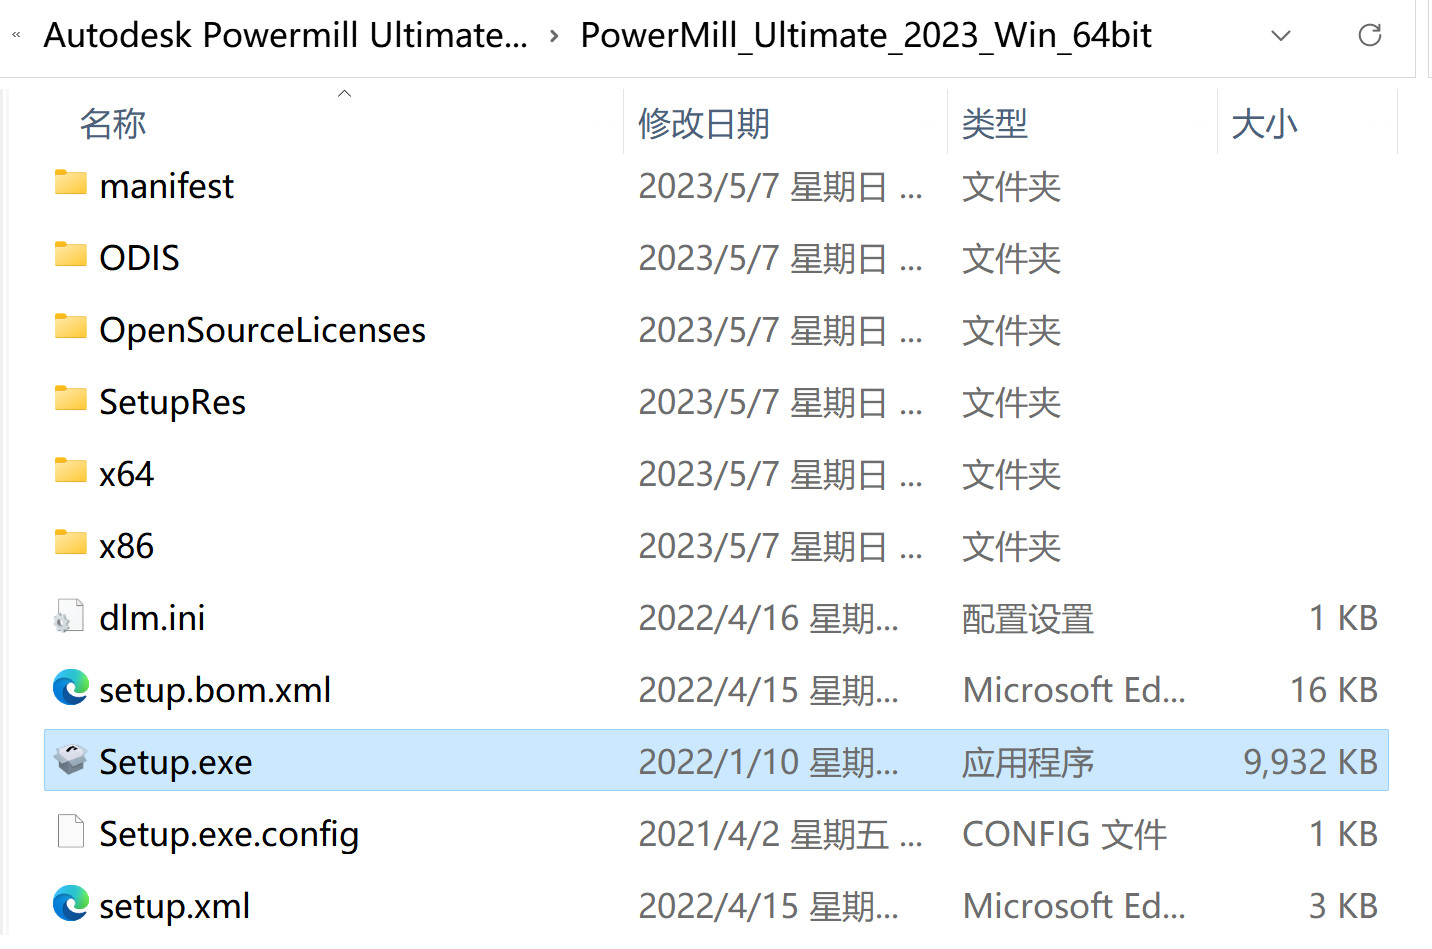 Autodesk Powermill Ultimate 2023(数控机床编程加工软件) v2023.1.1中文永久使用下载